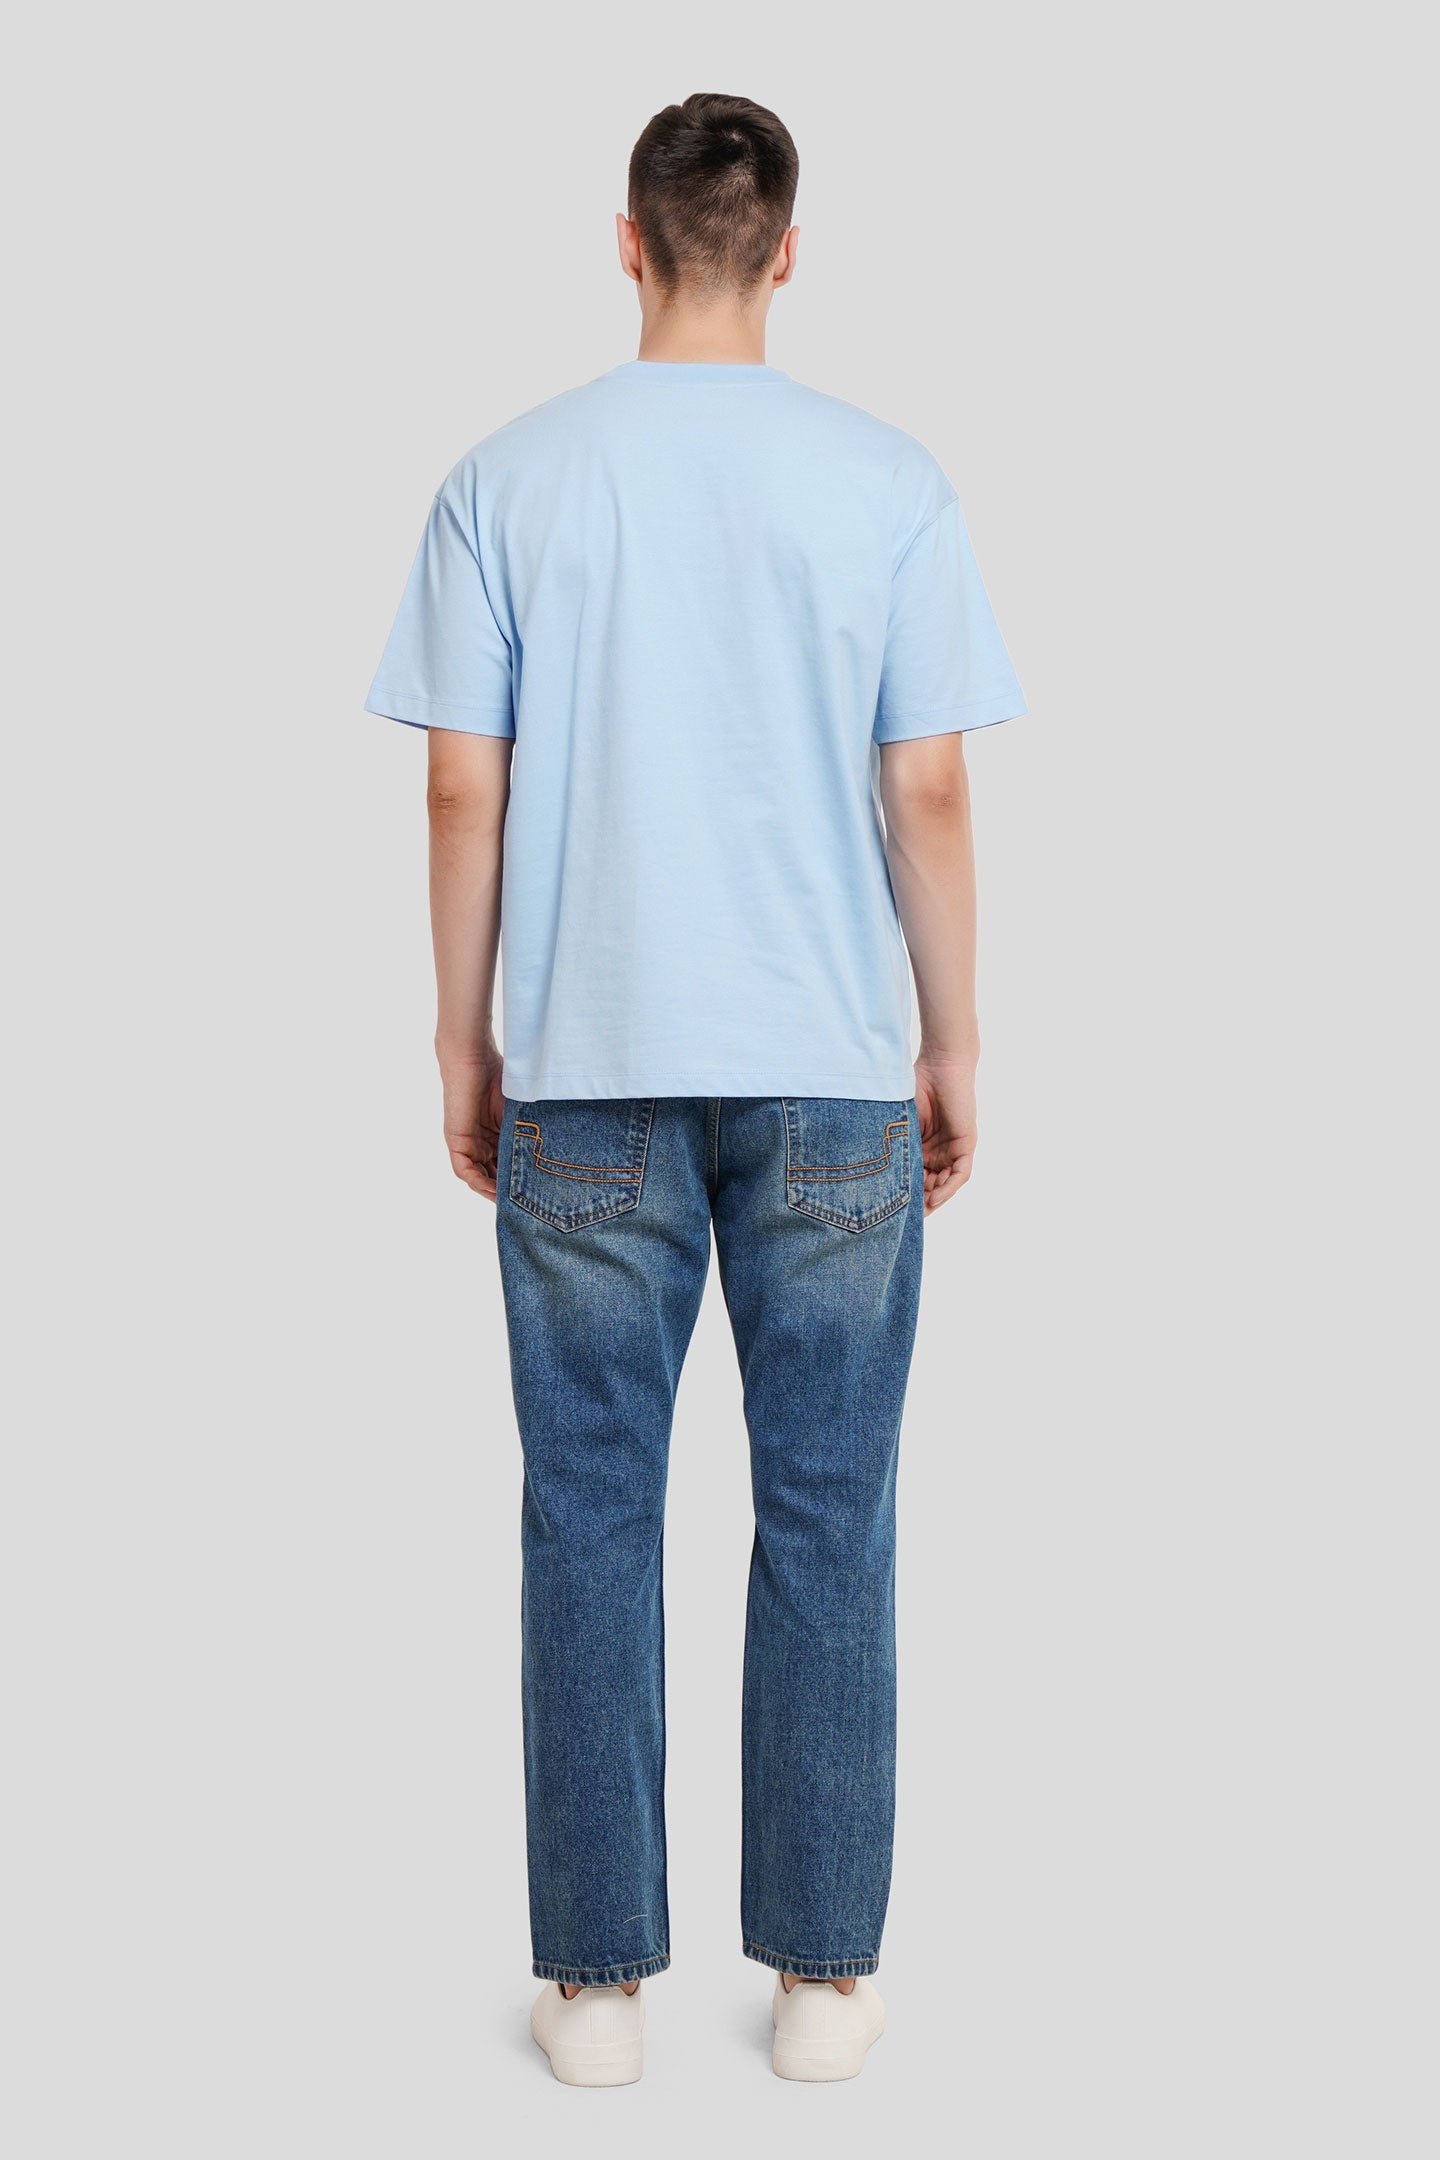 Koala Fun Powder Blue Printed T Shirt Men Oversized Fit With Front Design Pic 4